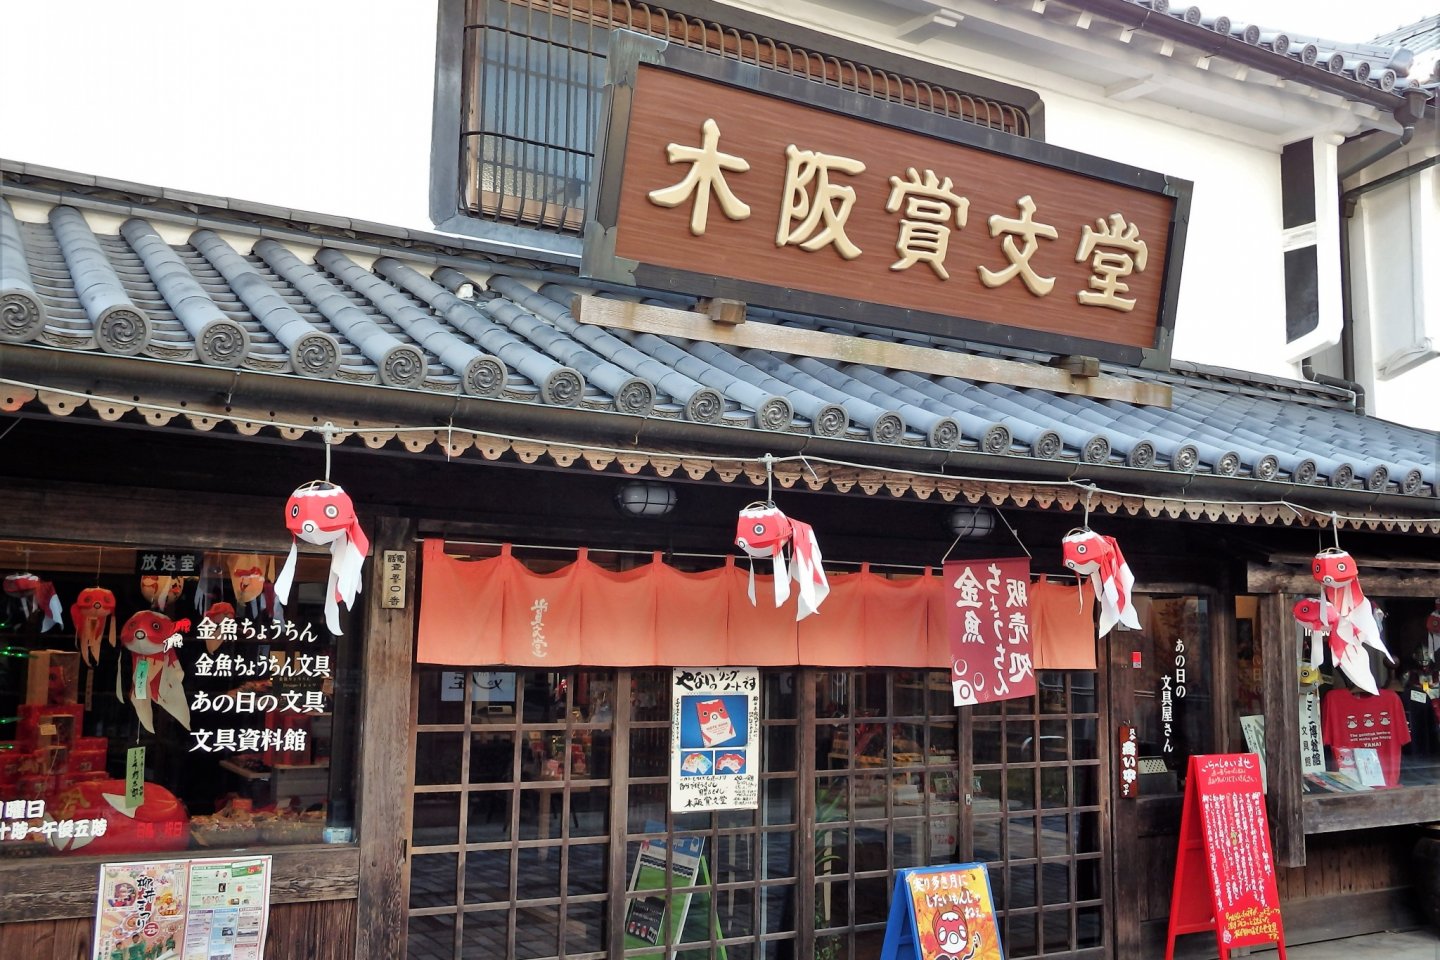 Shop for souvenirs at Kisaka Showbundo